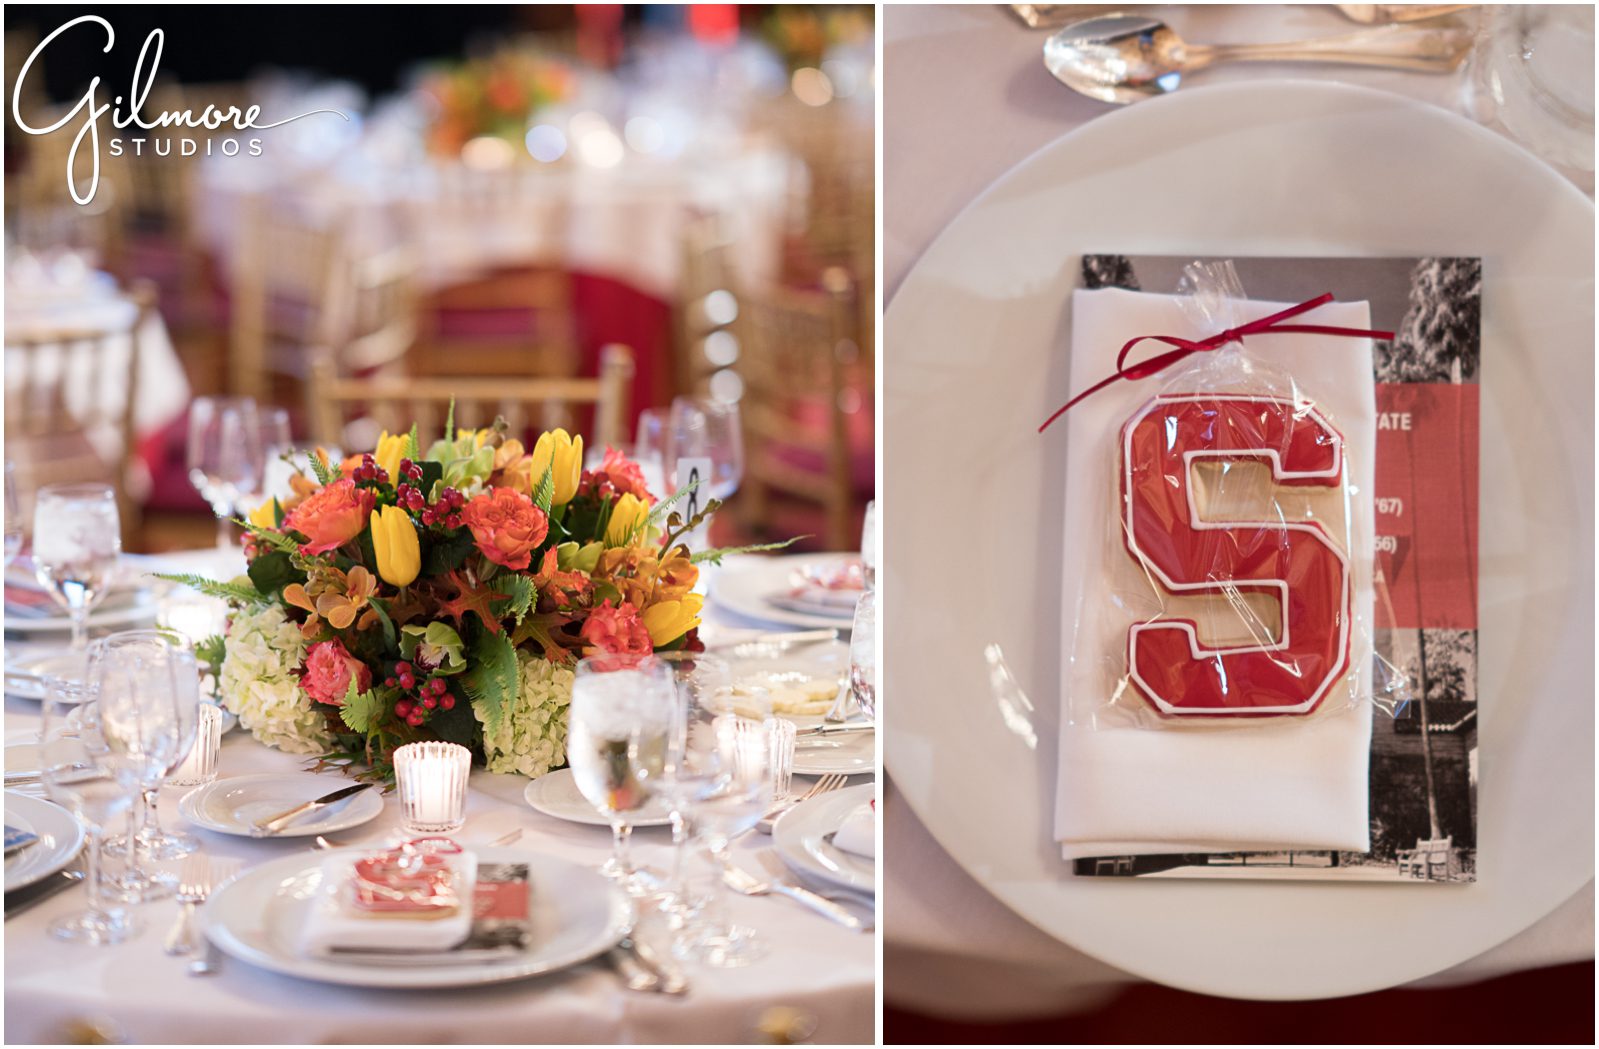 Floral centerpiece, Stanford University, sugar cookie, table decor, California Club event photographer